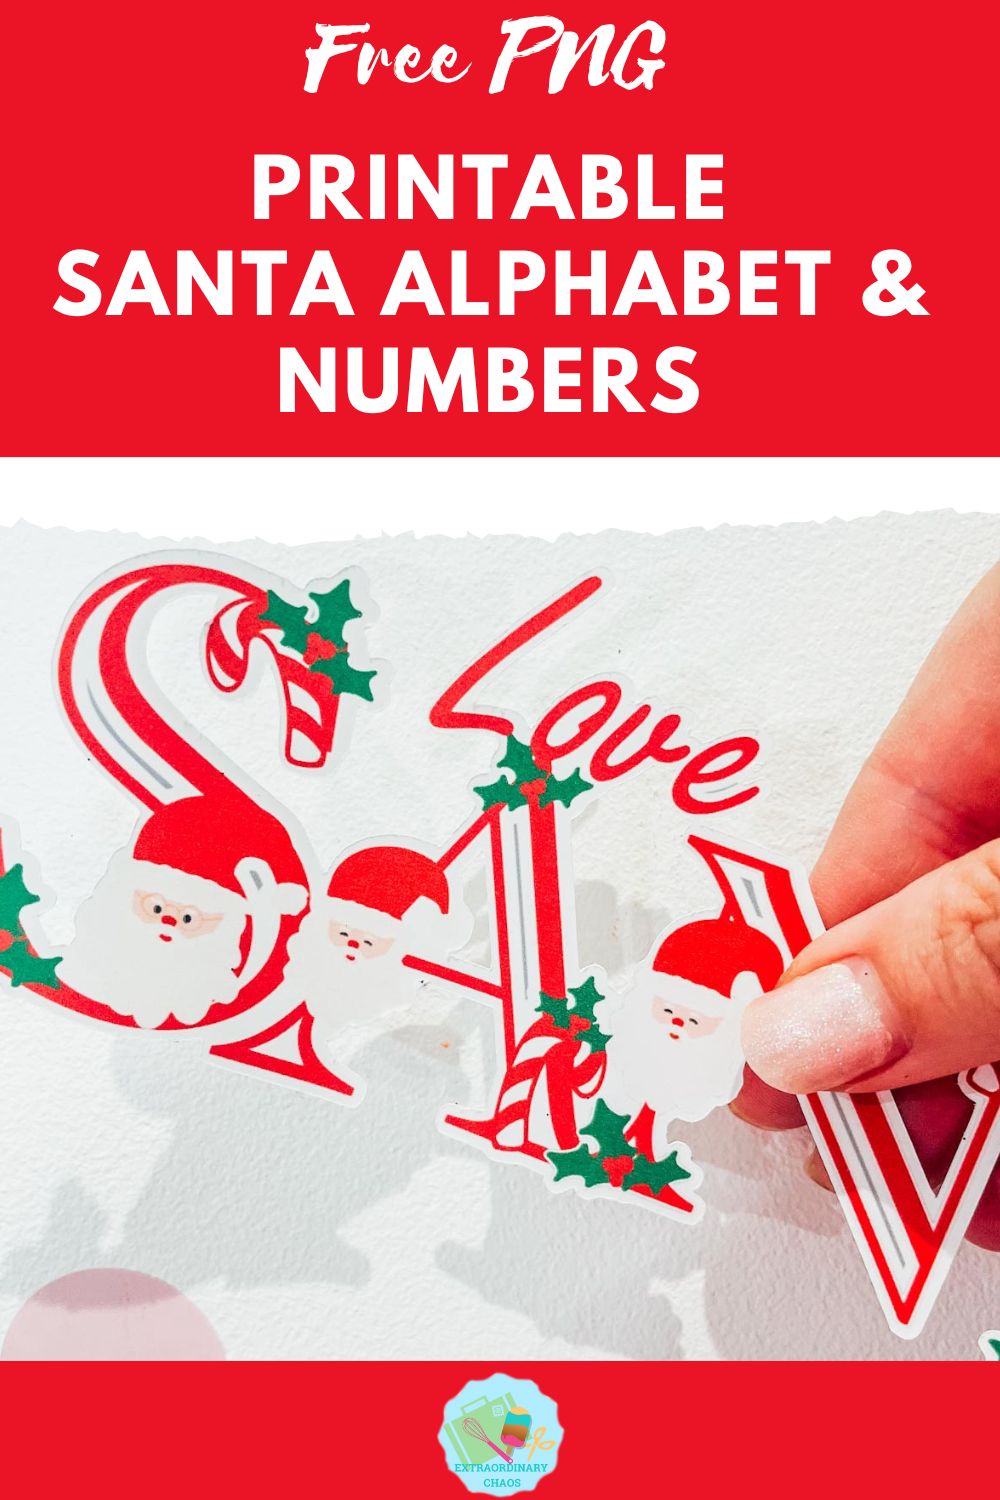 Free printable Santa Alphabet and numbers